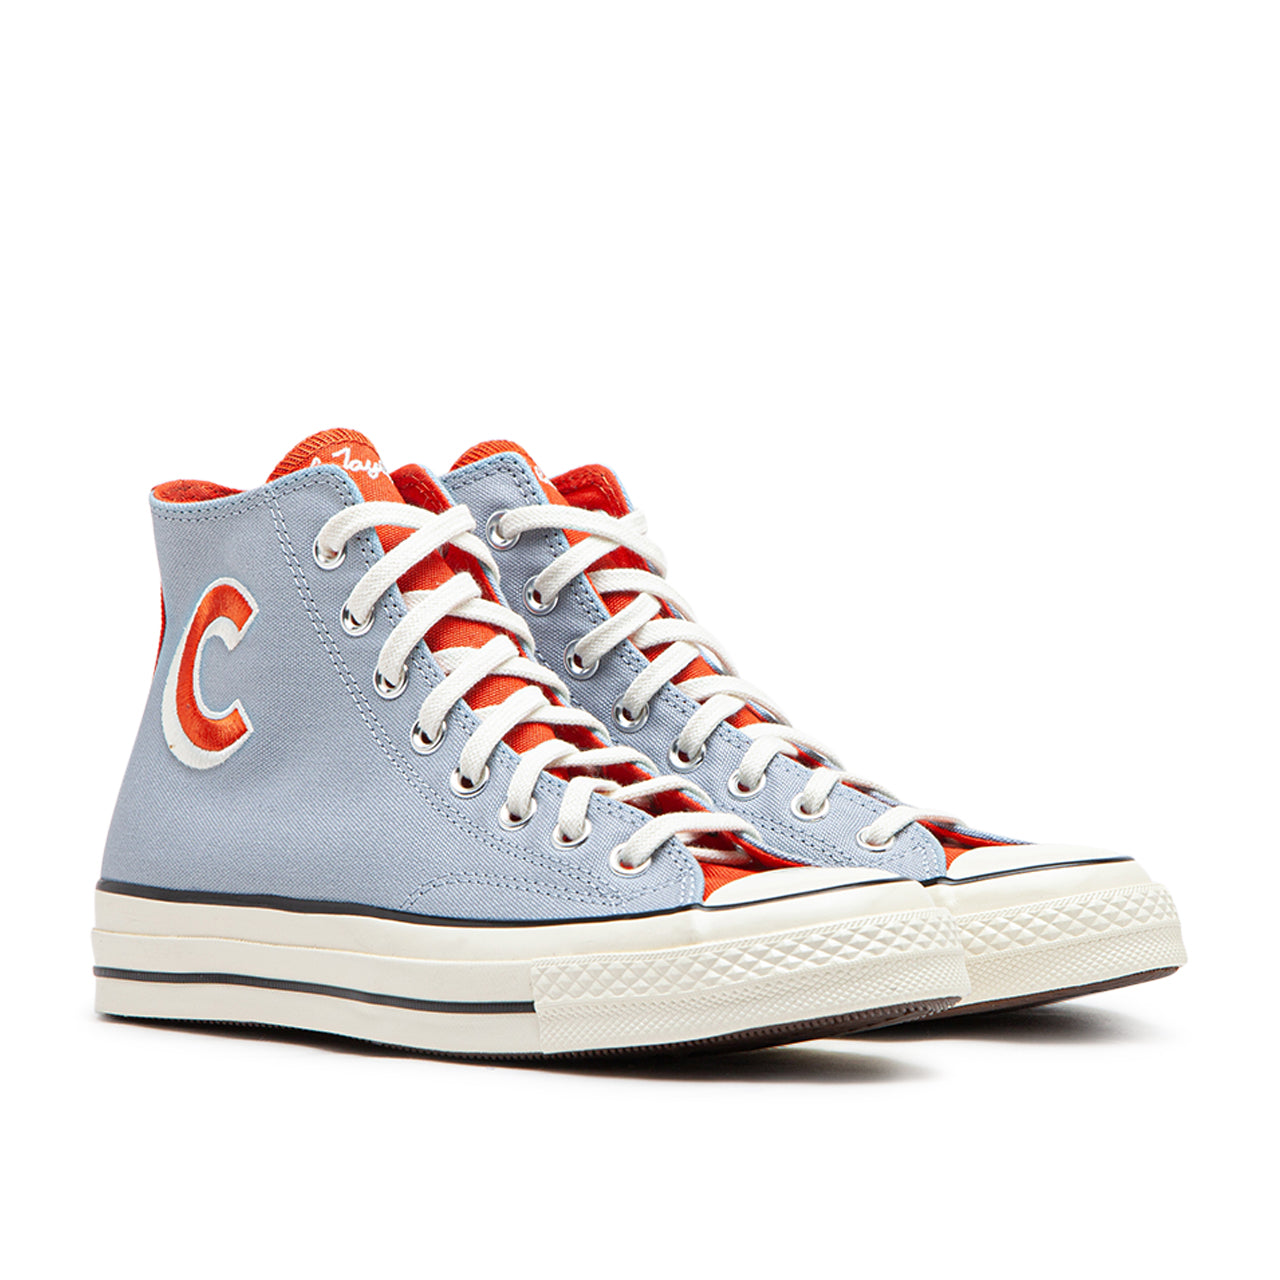 Converse Chuck Taylor 70 Hi (Blau / Weiß / Orange)  - Cheap Juzsports Jordan Outlet